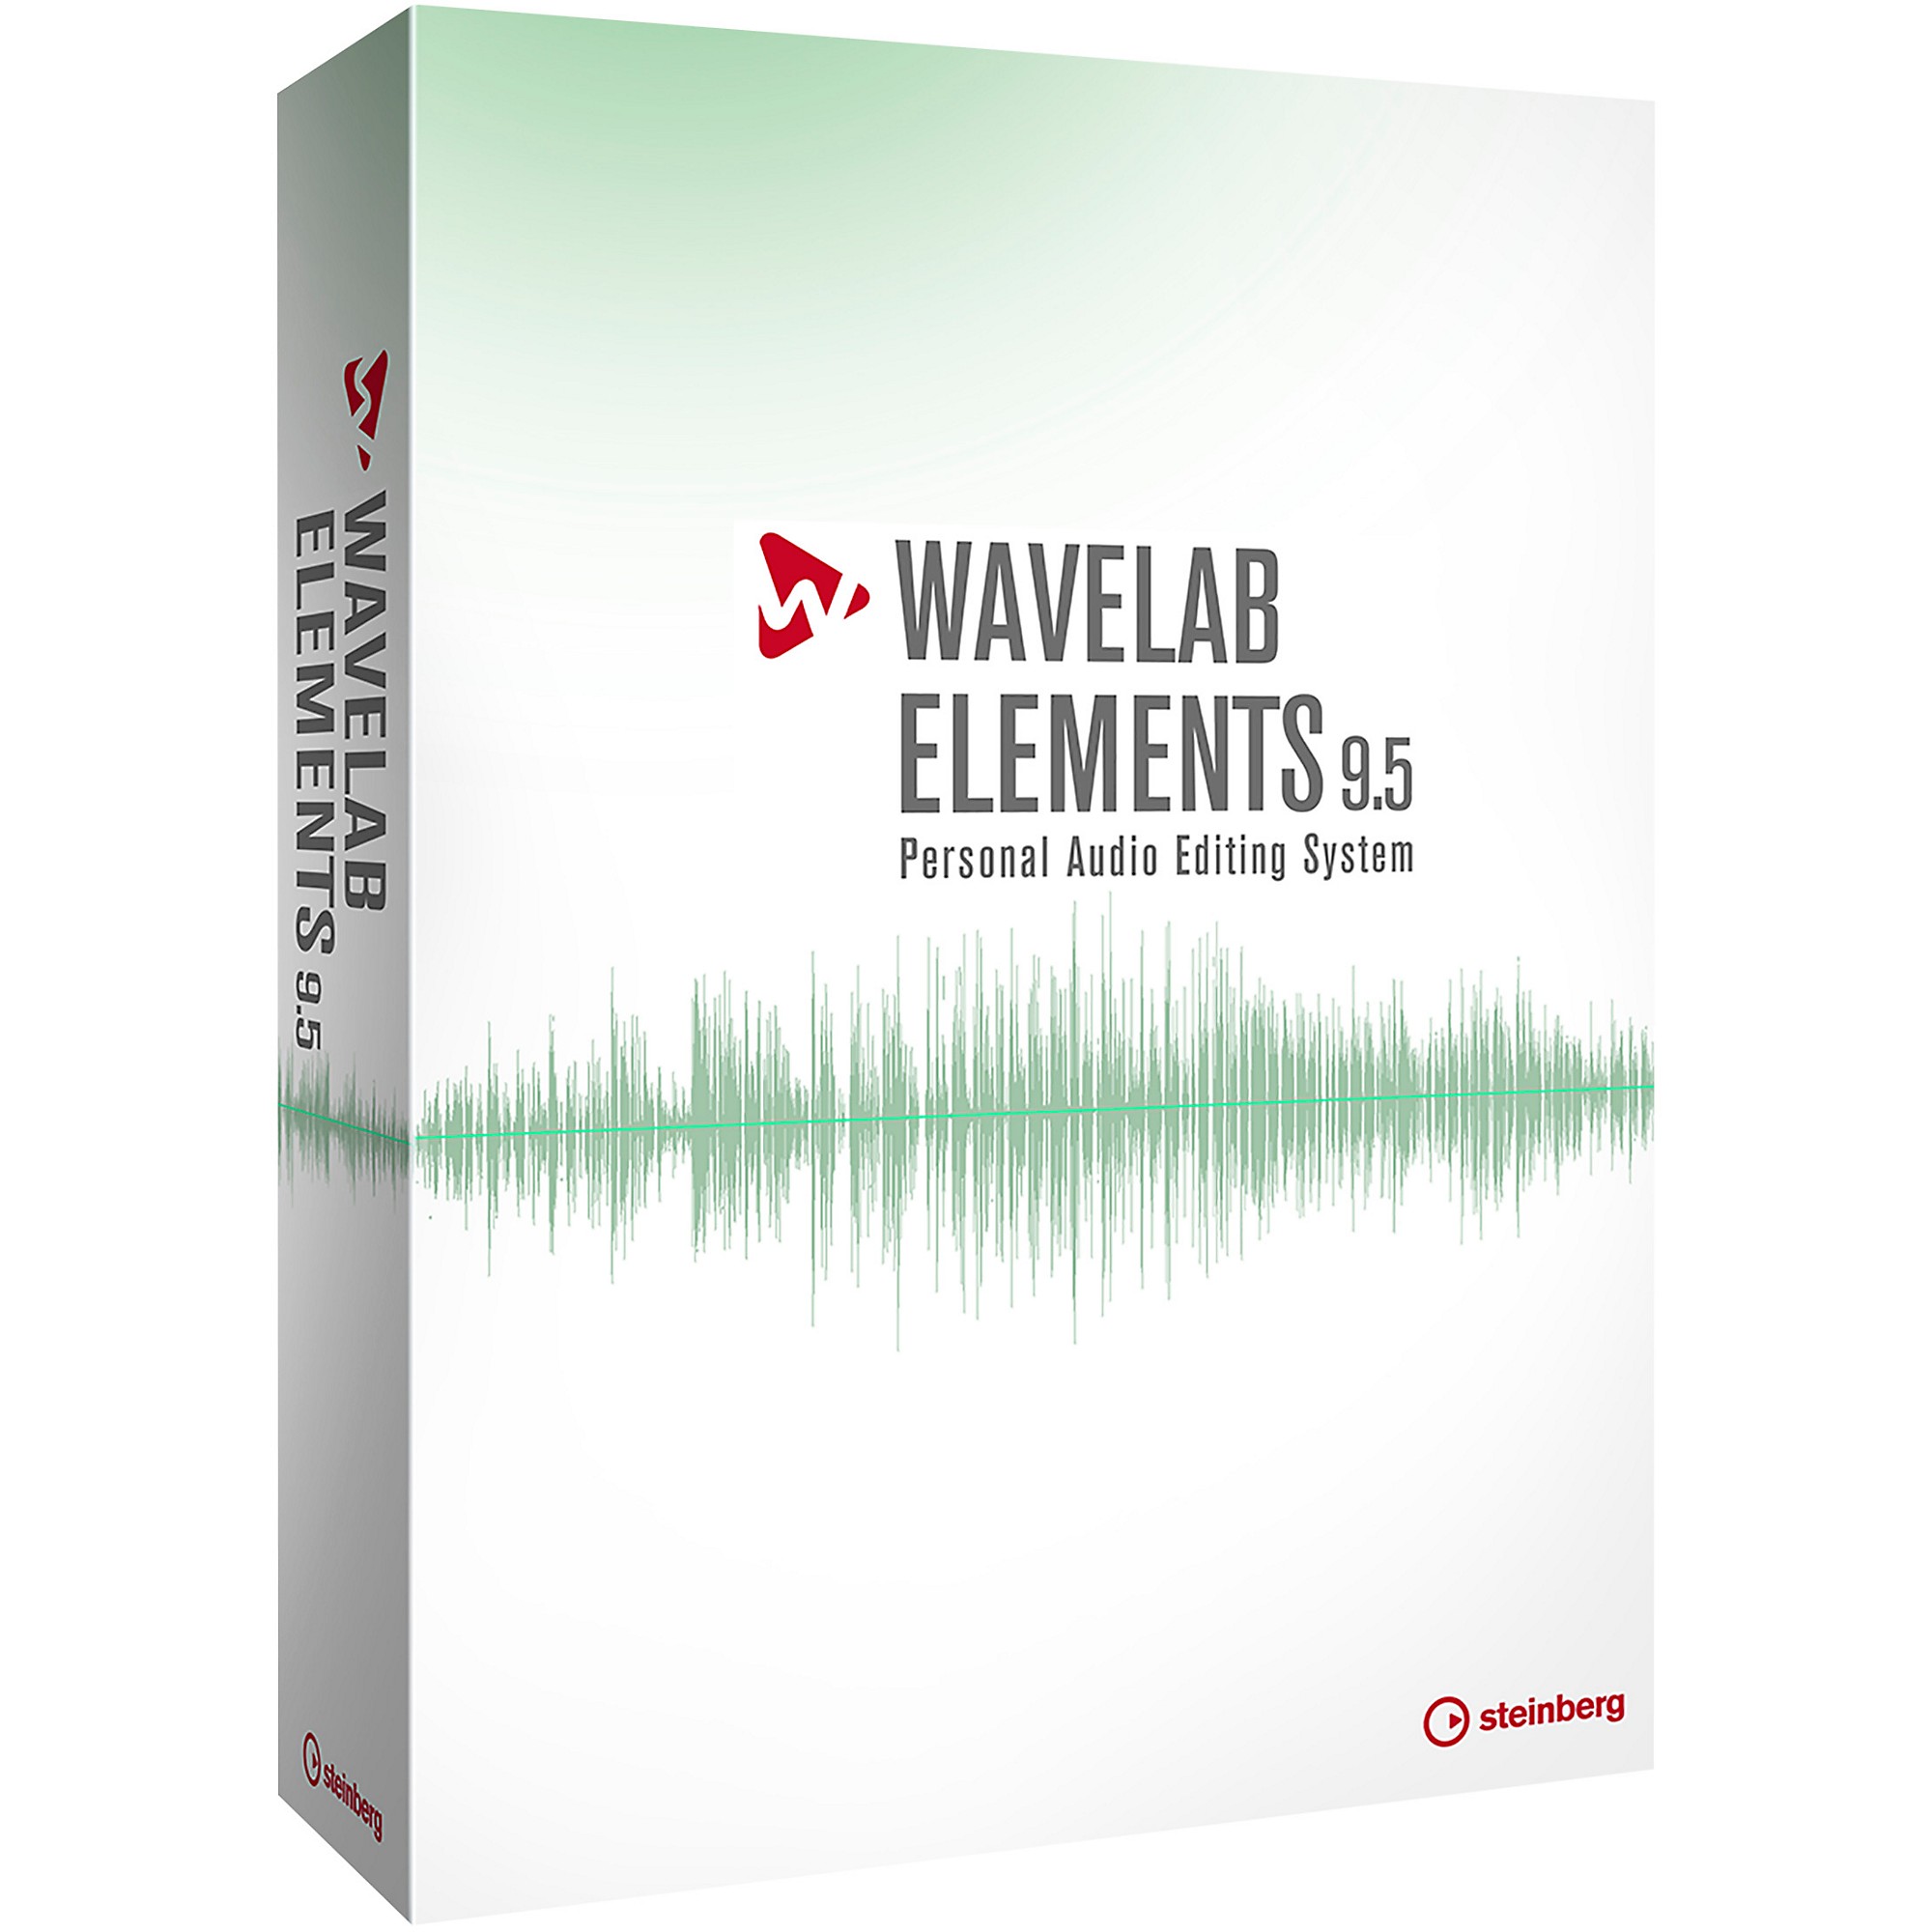 wavelab elements 9.5 manual